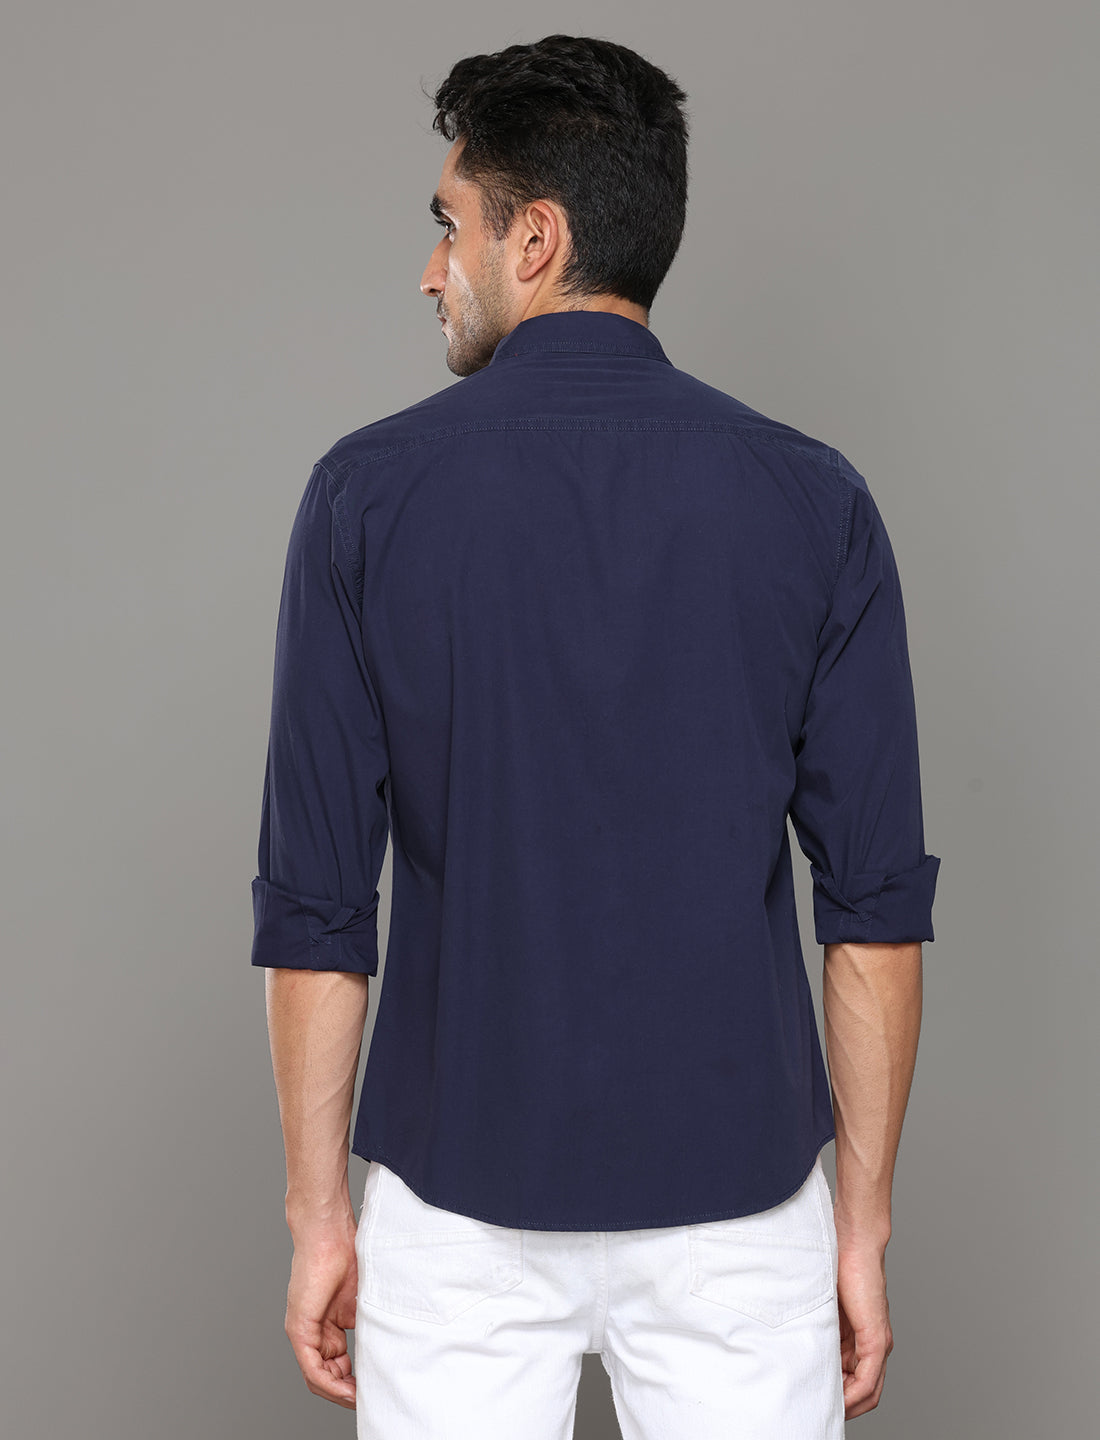 Men Blue Solid Regular Fit Cotton Casual Shirt - Kashyap Global Lifestyles LLP